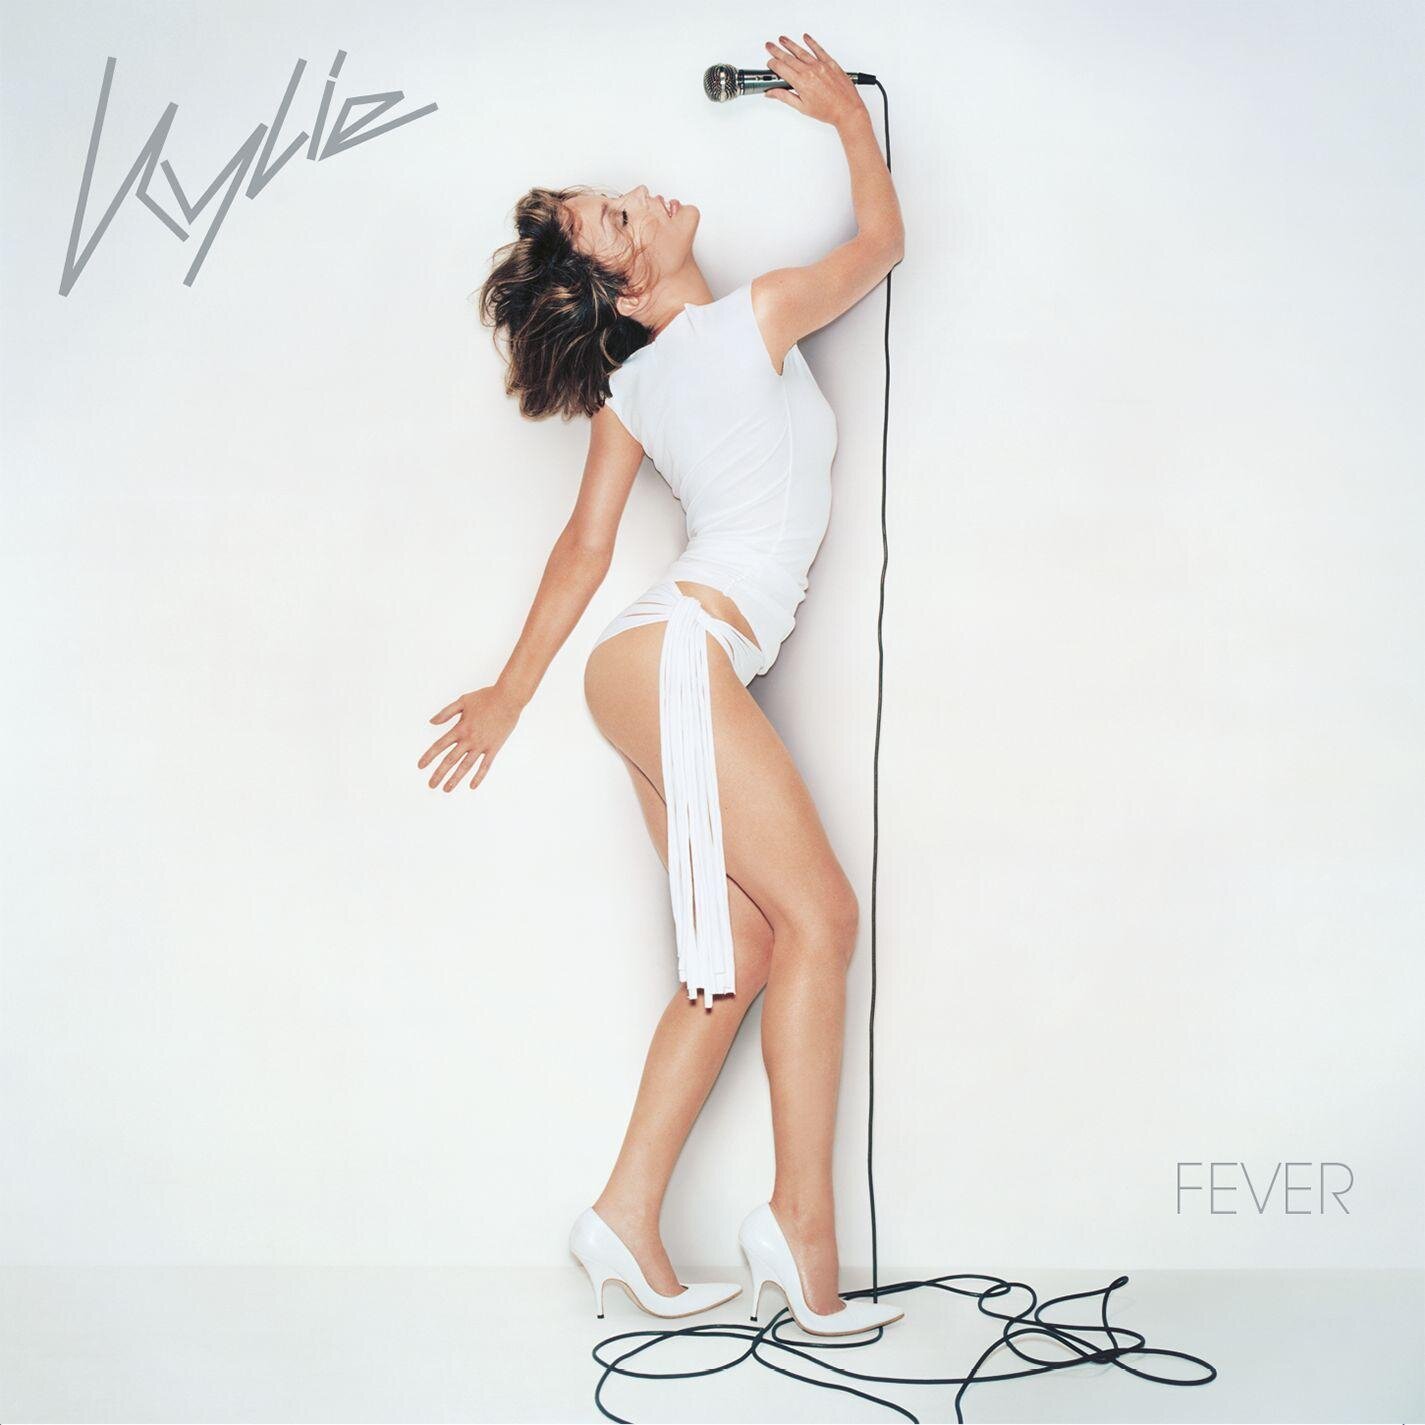 Поп WM Kylie Minogue - Fever (Limited 180 Gram White Vinyl/Poster) поп wm kylie minogue fever limited 180 gram white vinyl poster